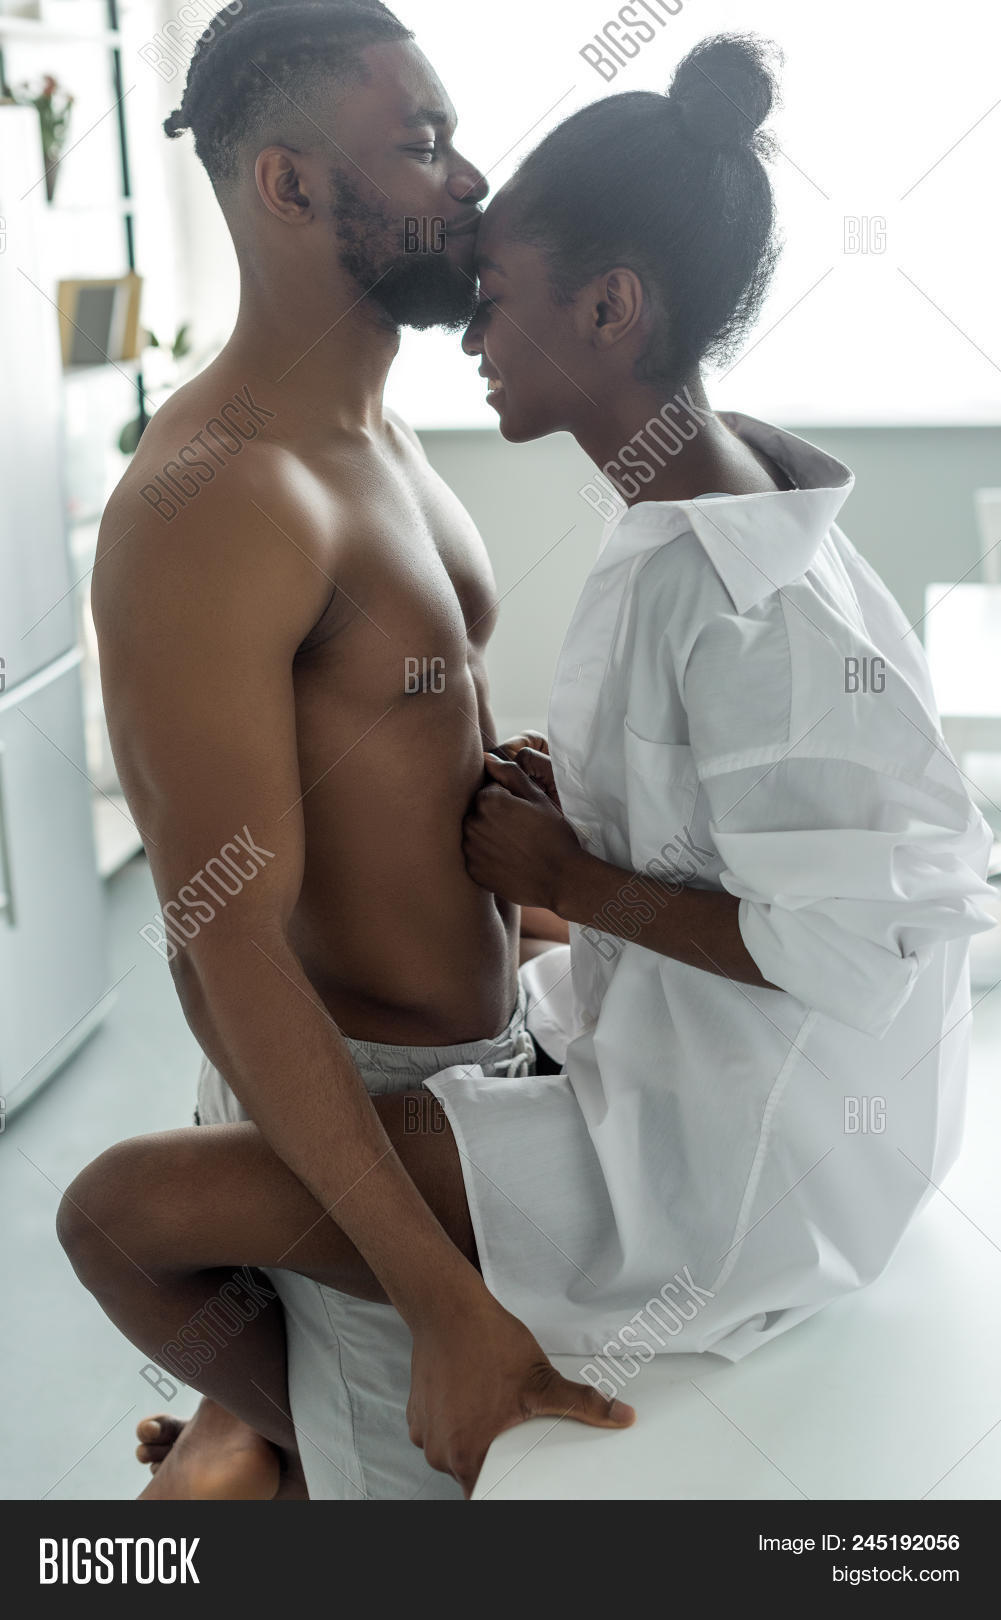 chris zarrella recommends Sexy Black Couples